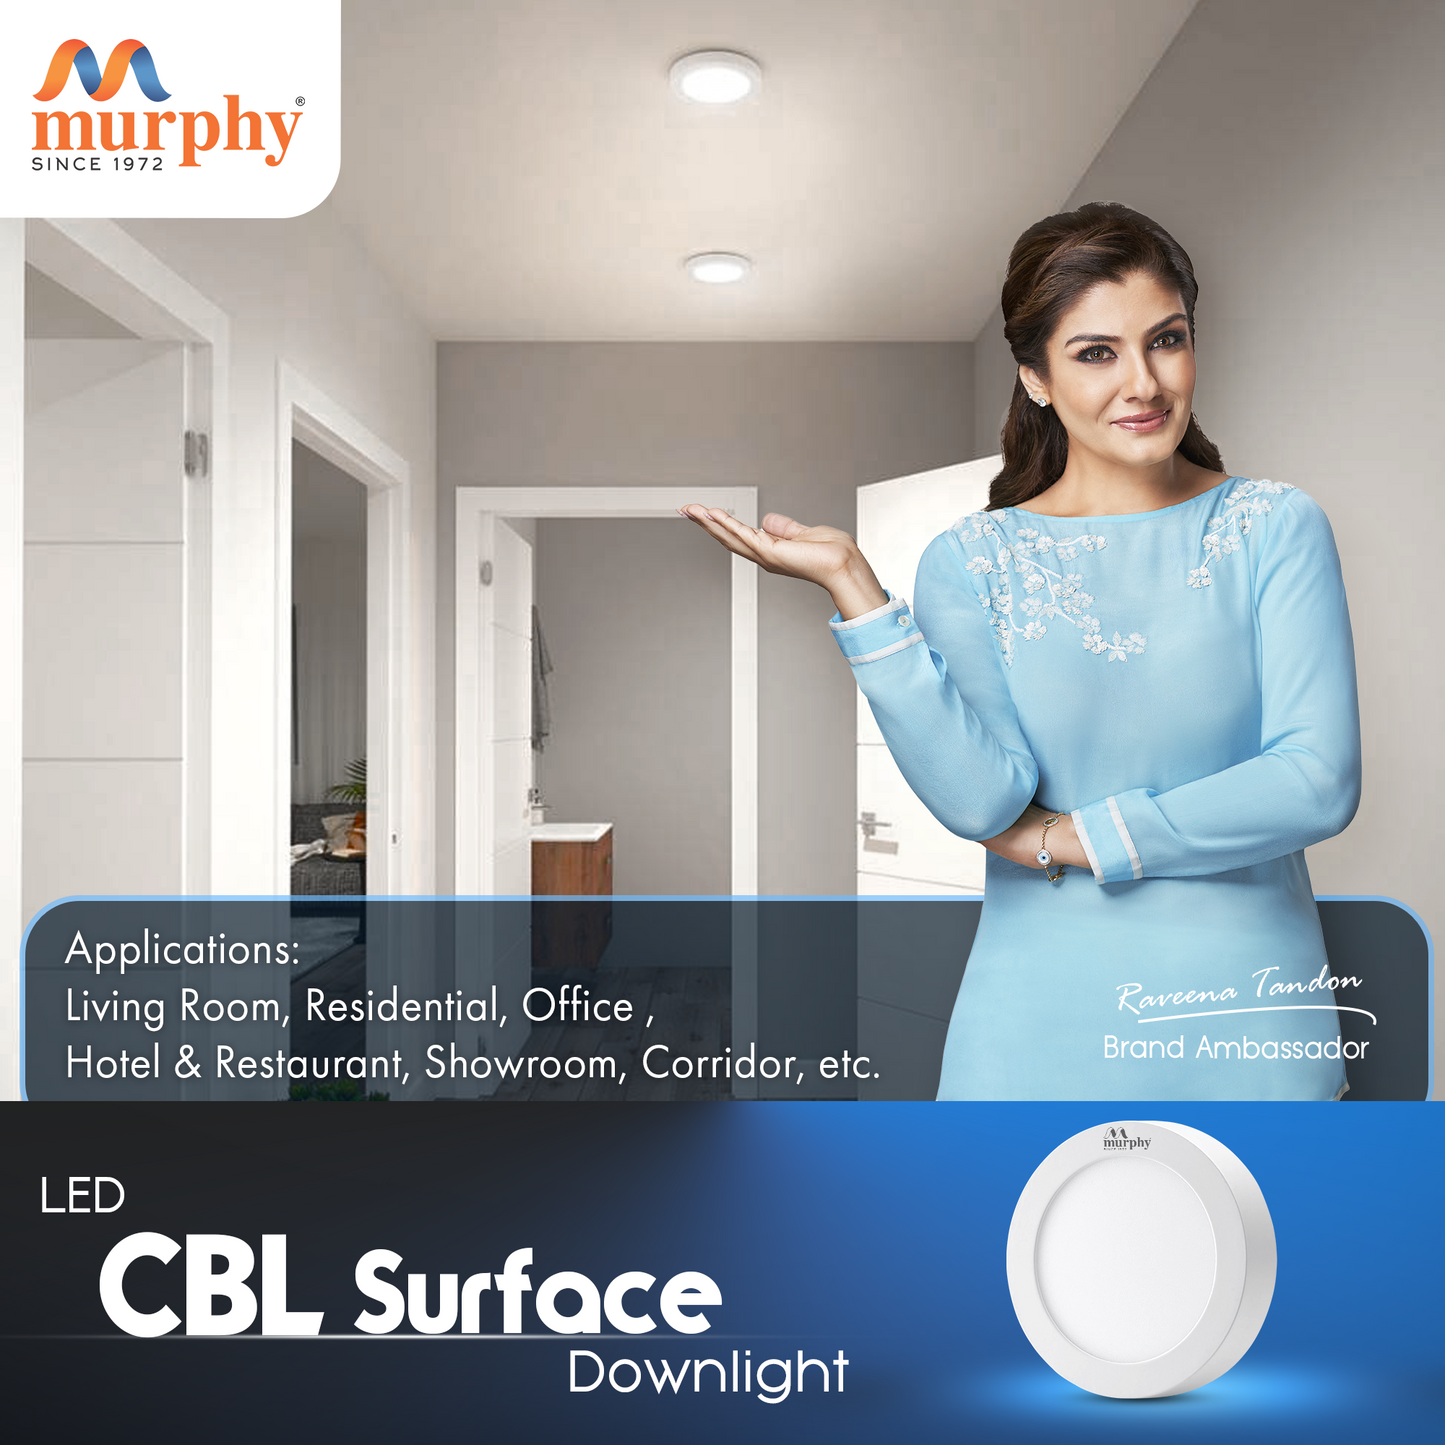 Murphy 9W CBL LED Surface Down Light